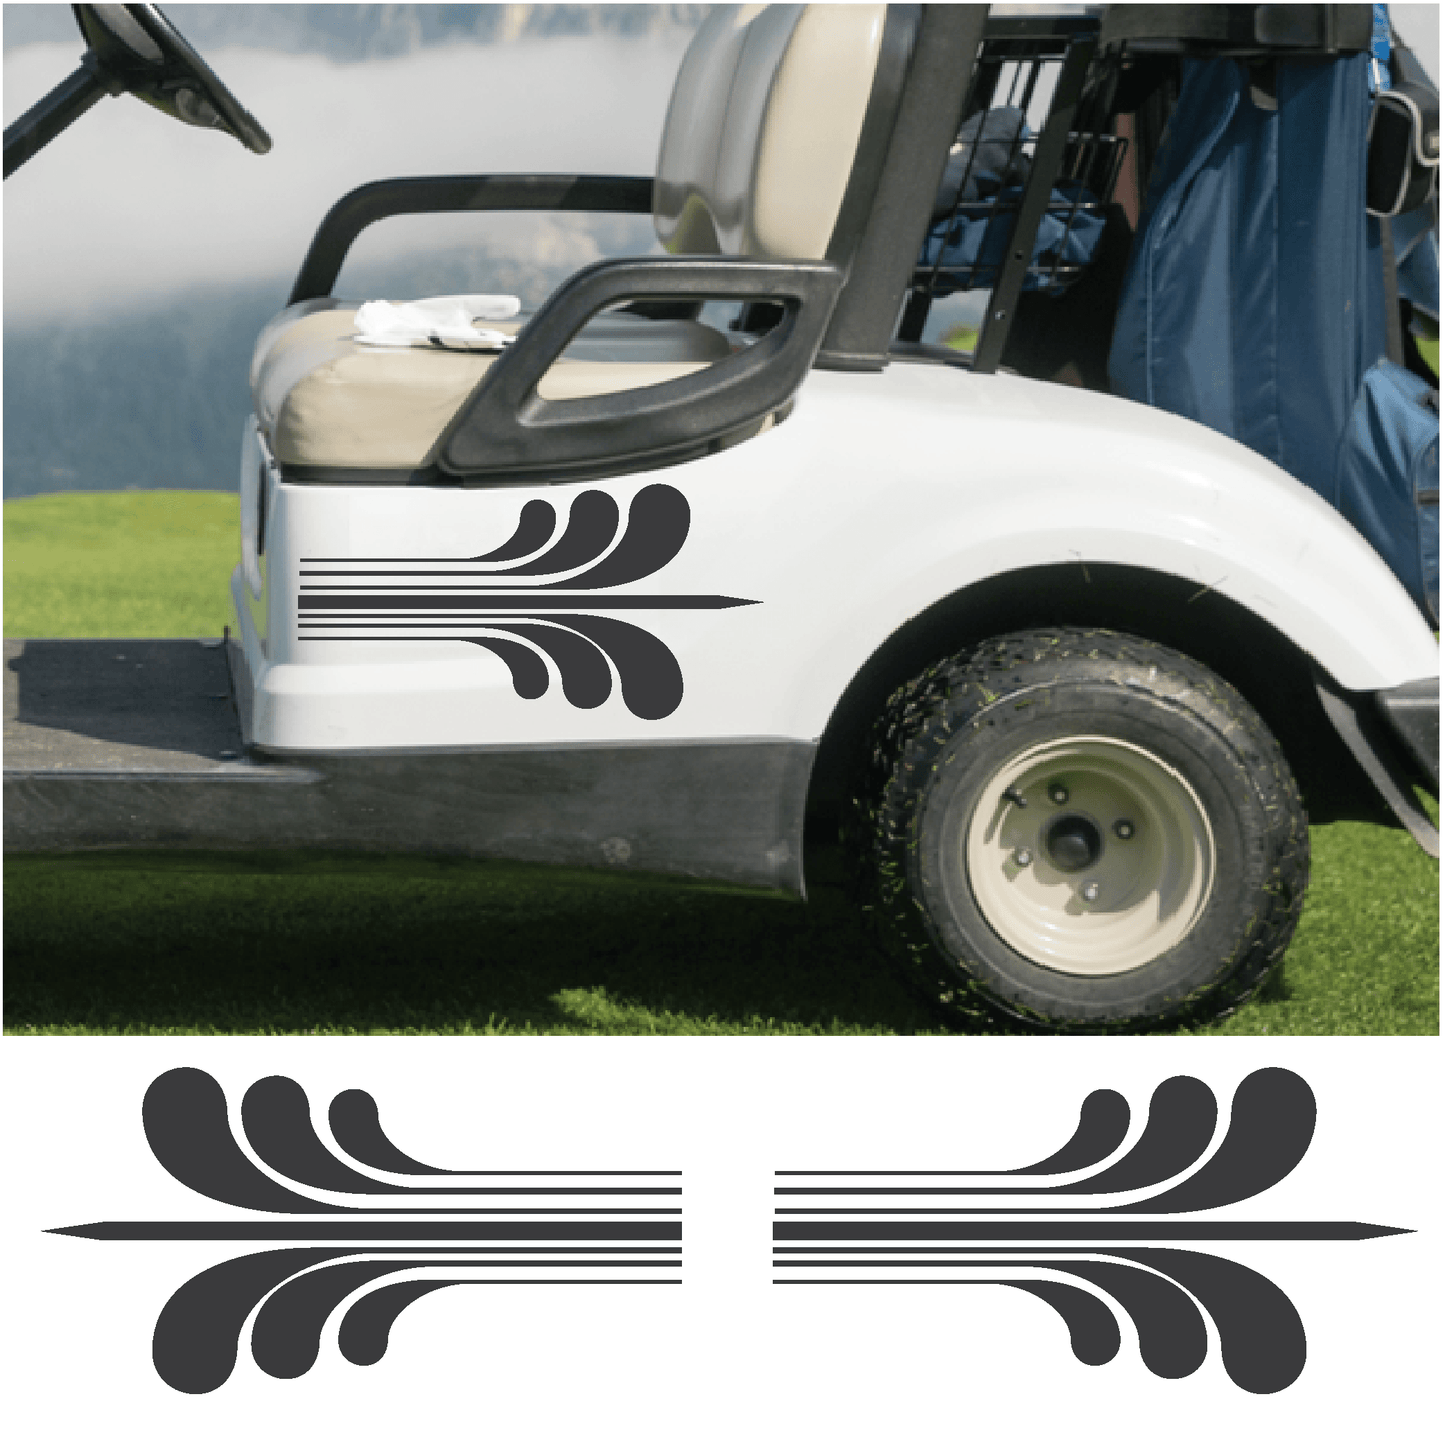 ShopVinylDesignStore.com Golf Cart Decals Style S002 Golf Cart Shop Vinyl Design decals stickers